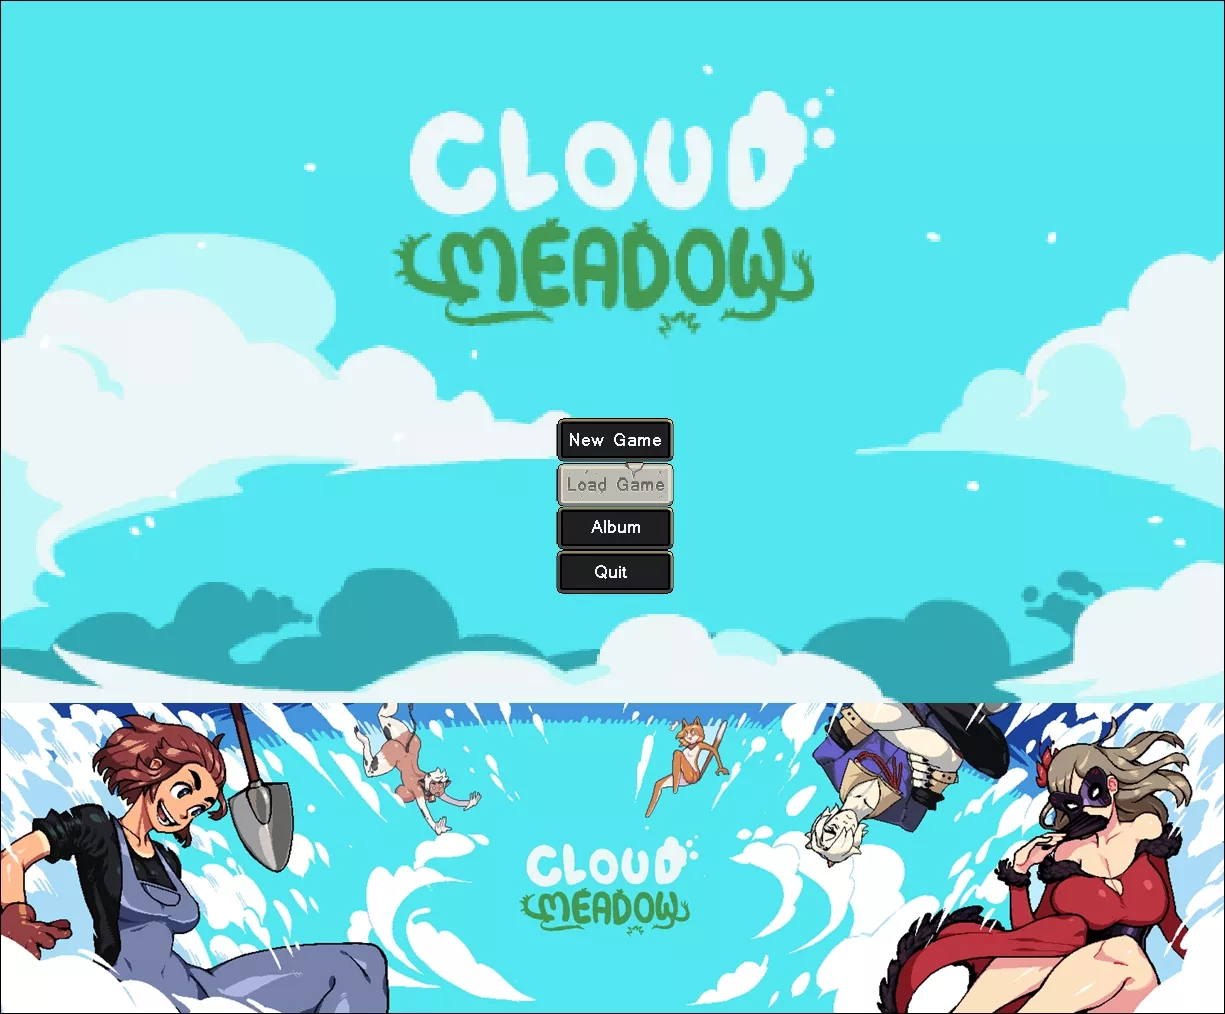 Cloud meadow animation